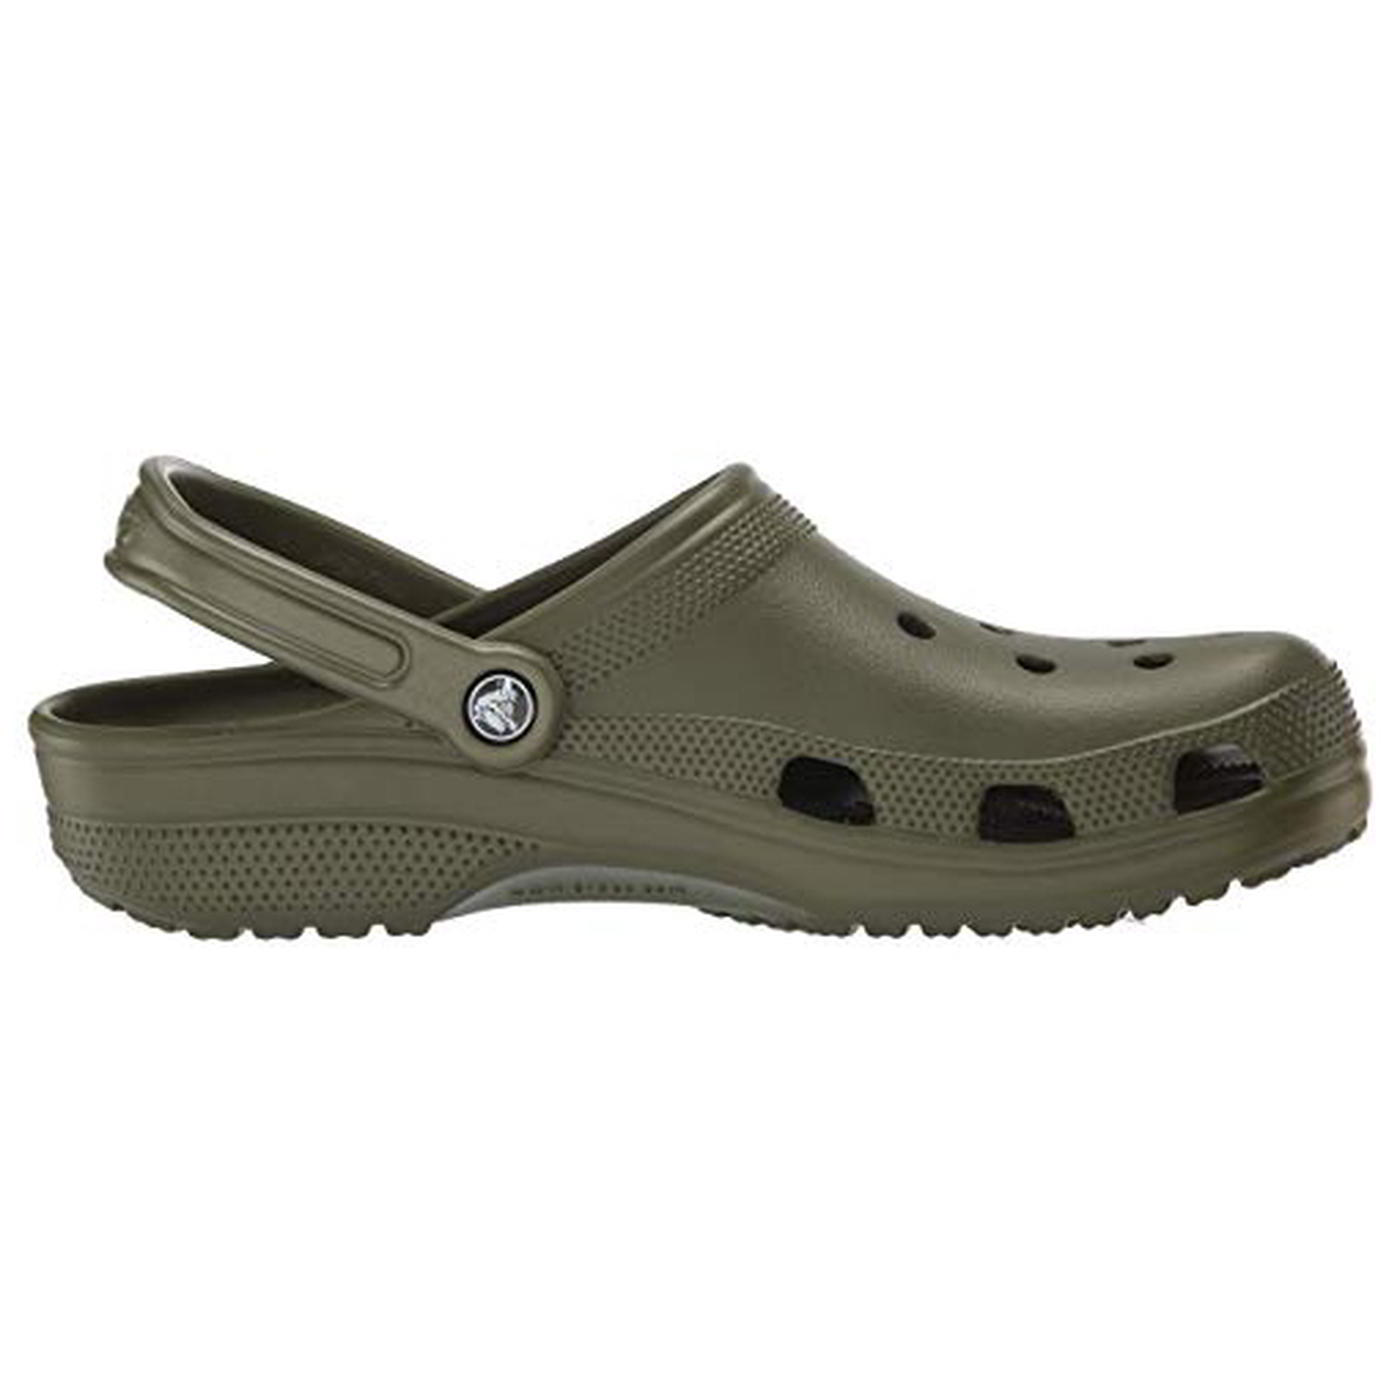 Crocs Mens Womens Classic Clog Vegan Work Shoes Sandals - Army Green 2951